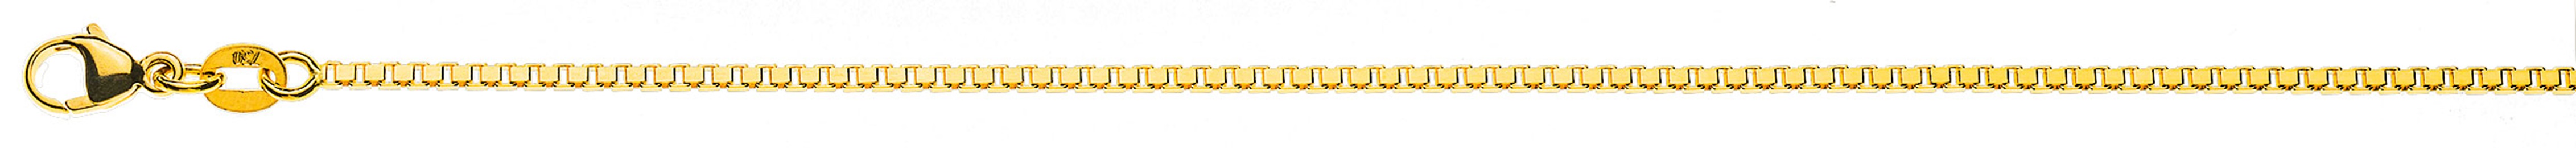 AURONOS Prestige Necklace yellow gold 18K Venetian chain diamond 55cm 1.4mm